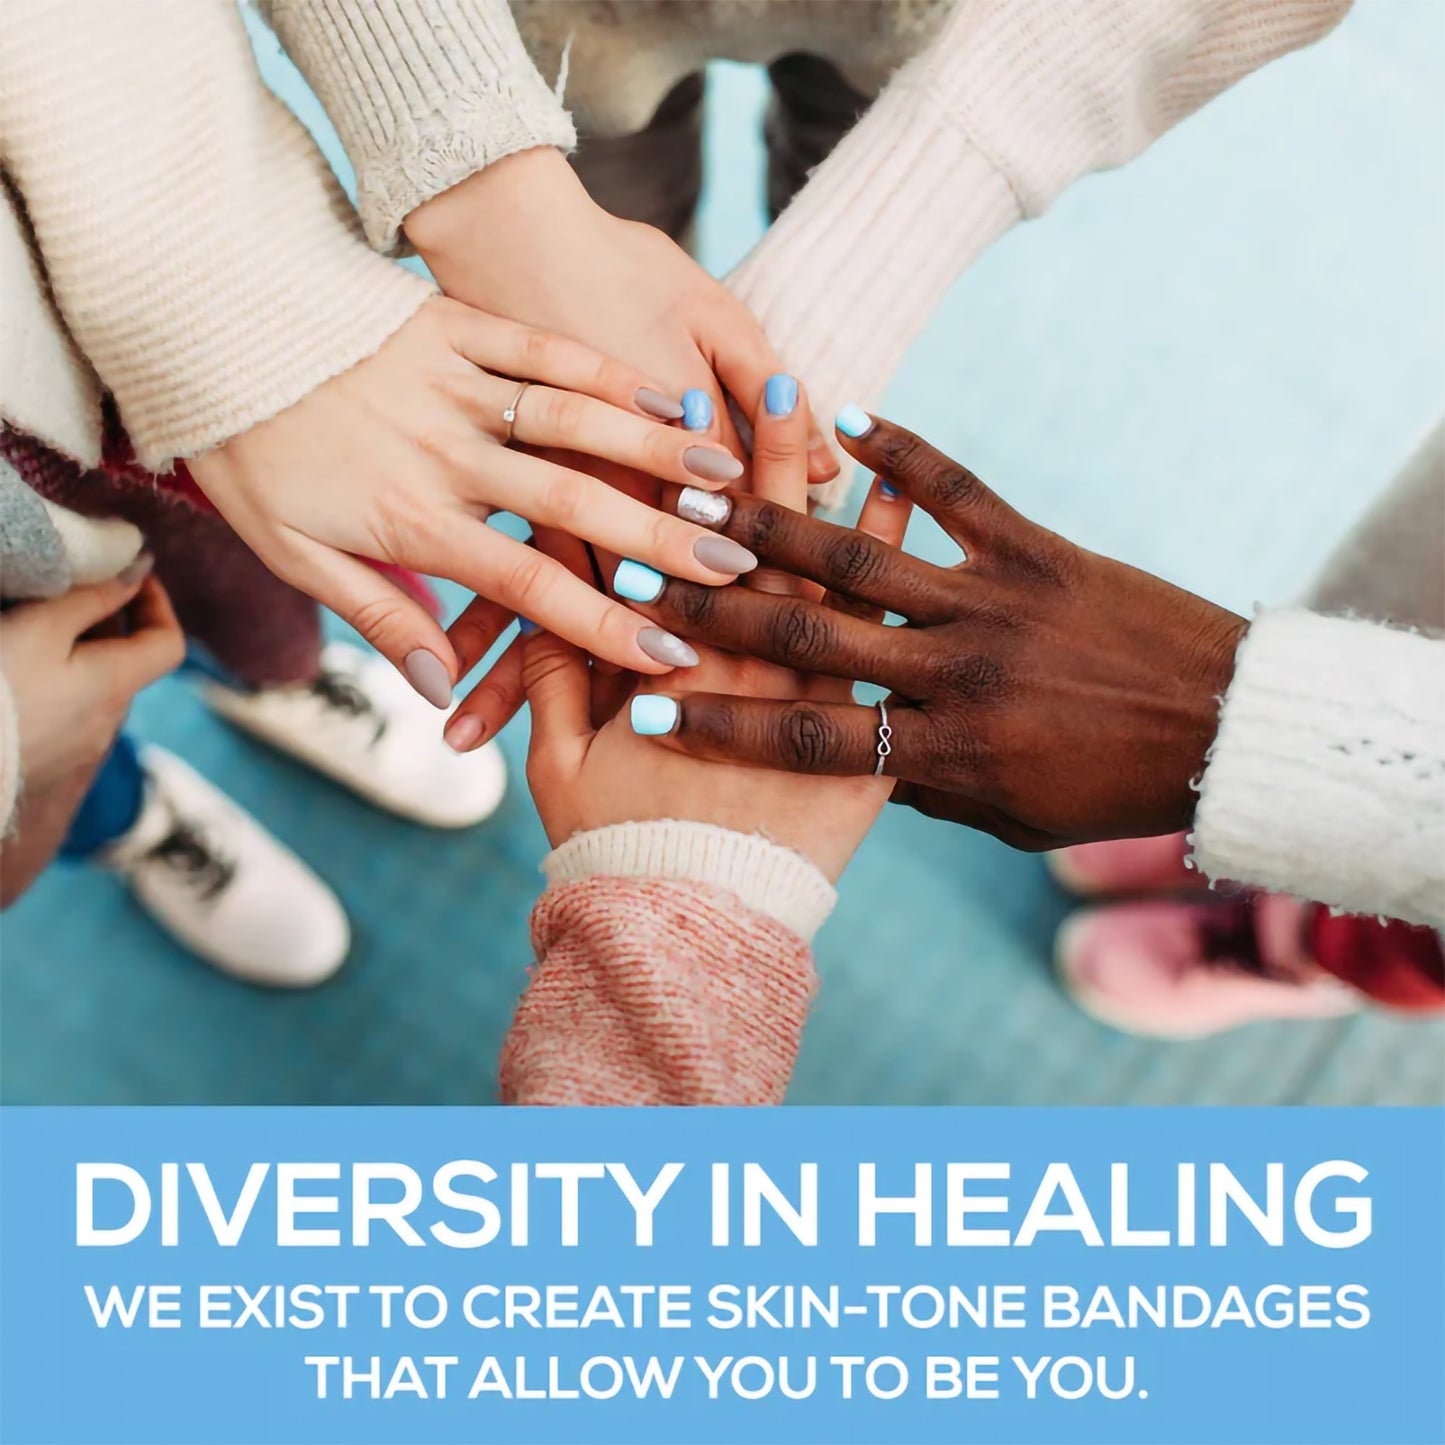 Tru-Colour Skin Tone Bandages Variety Pack, Latex-Free Adhesive Bandage